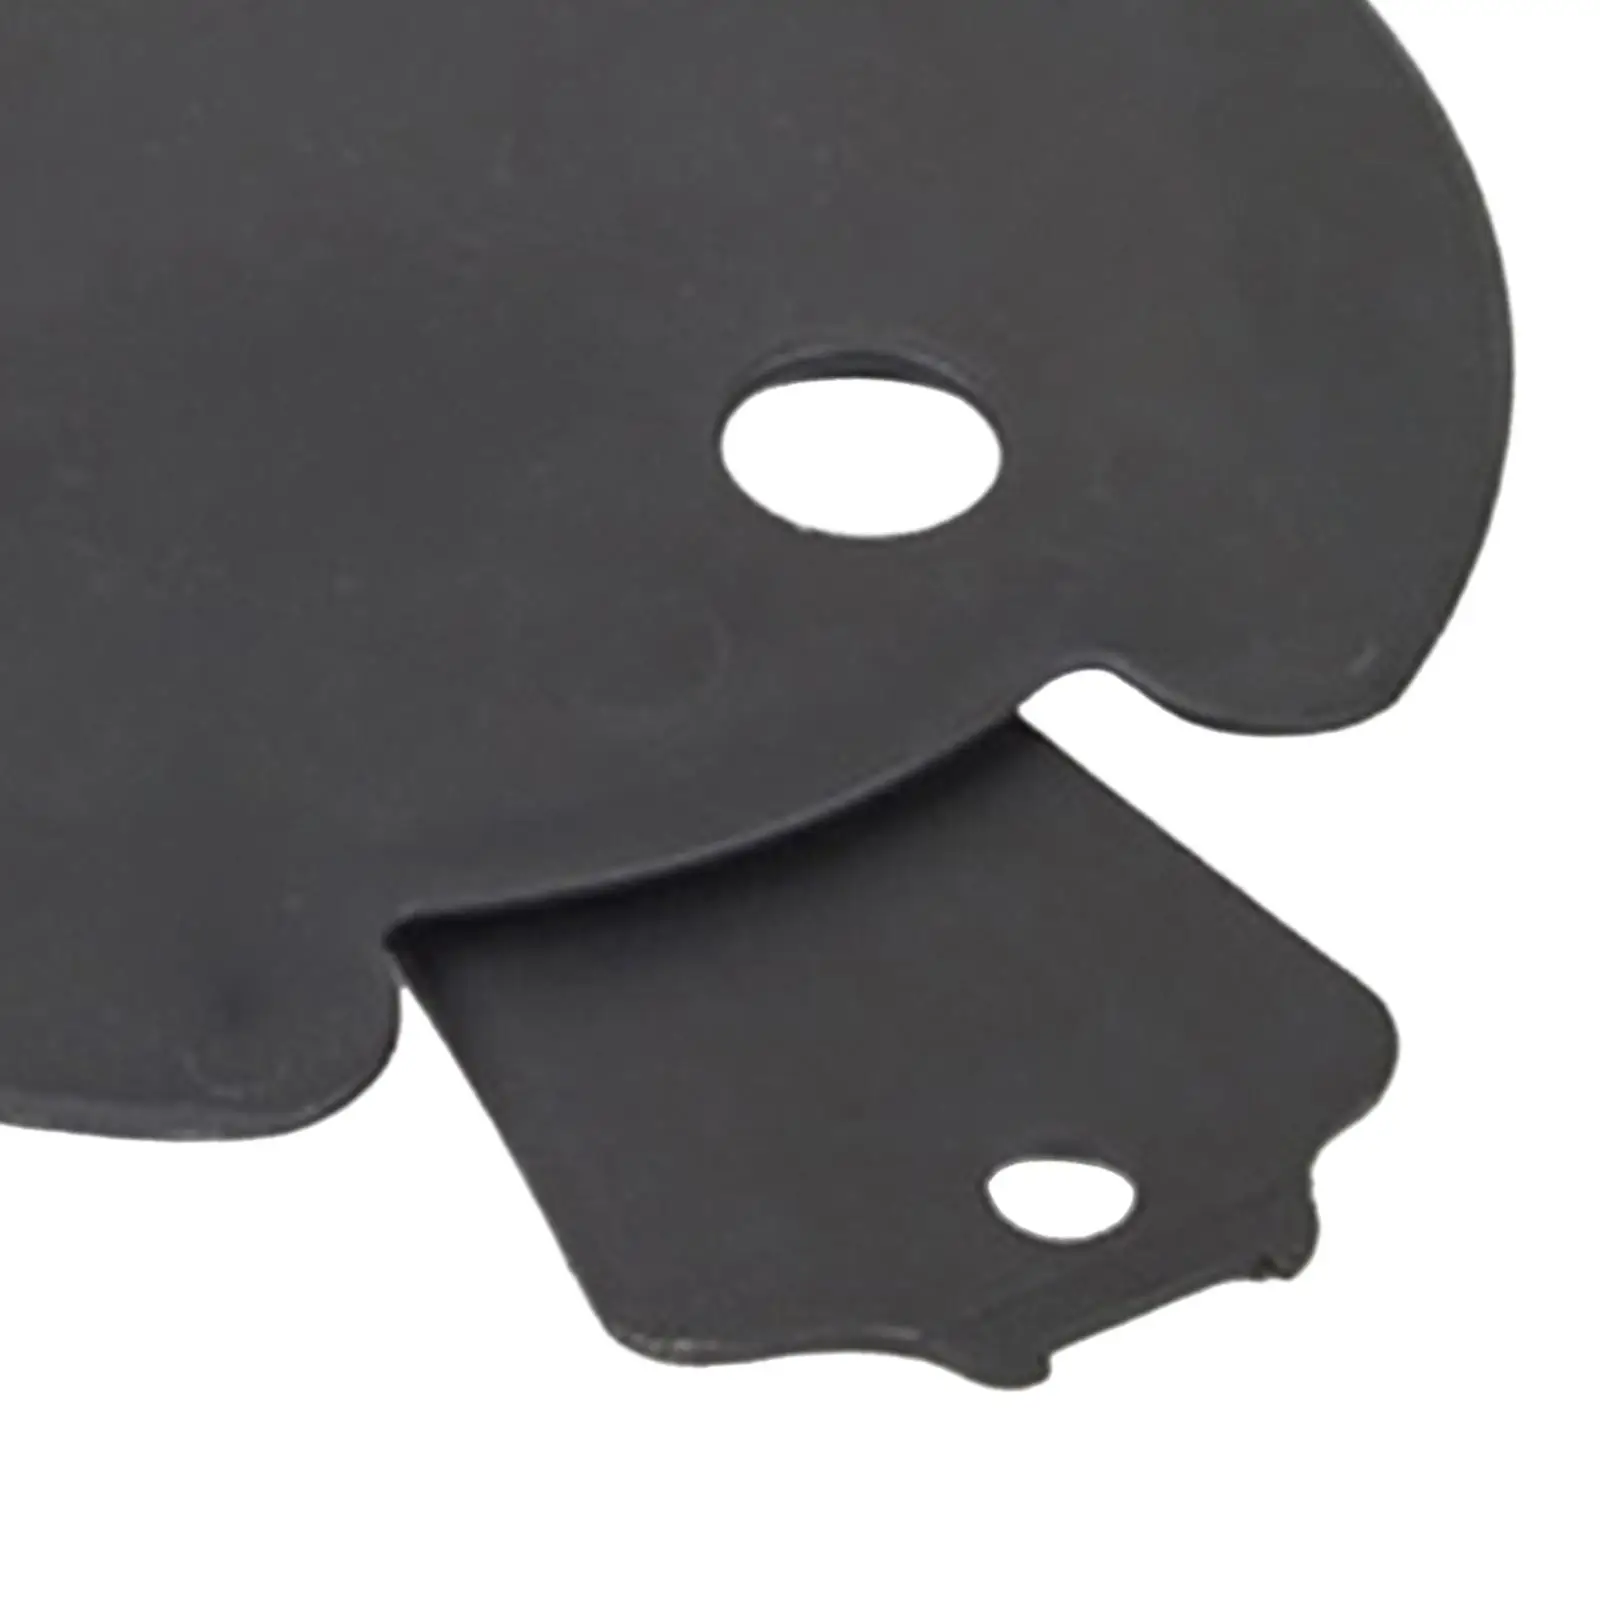 Auto Oil Sump Underfloor Drain Cover Flap 7209541 Accessories Direct Replaces